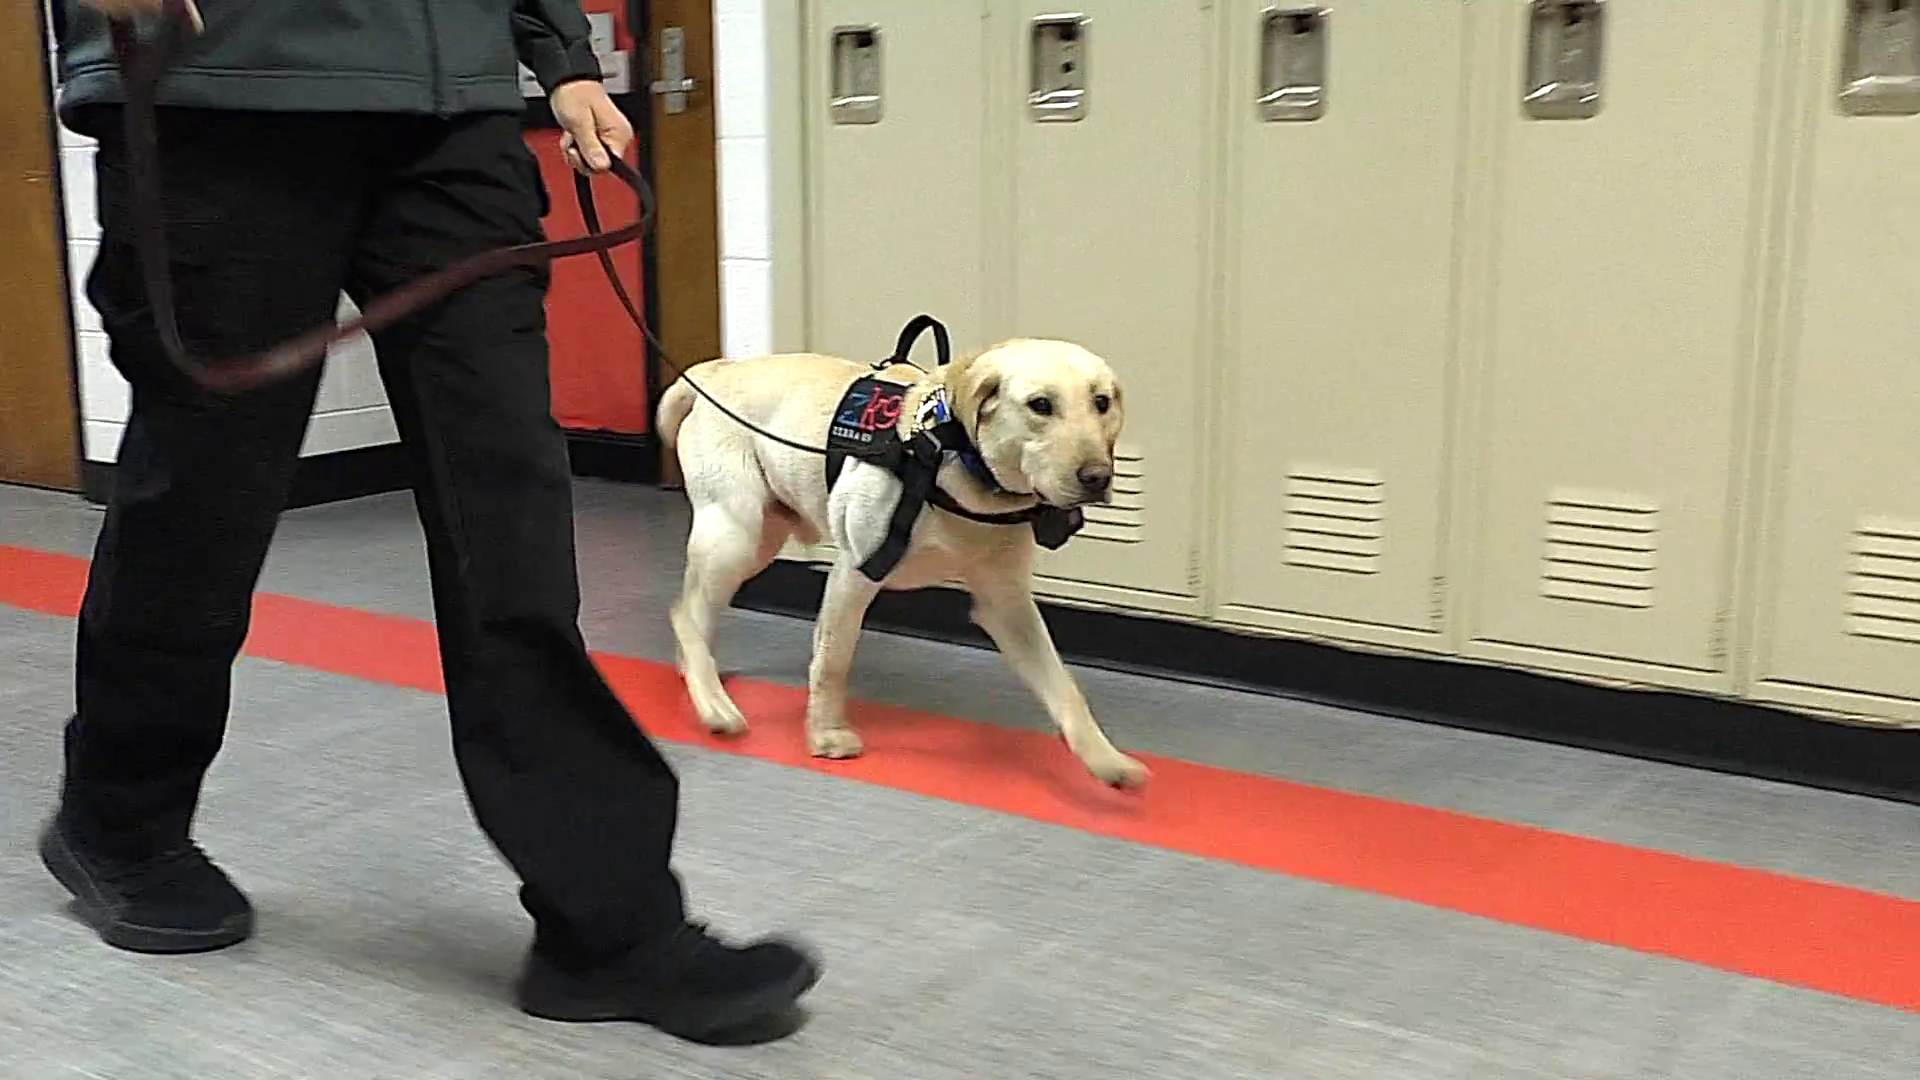 Rudyard Schools welcome Gator, a new K9 safety dog